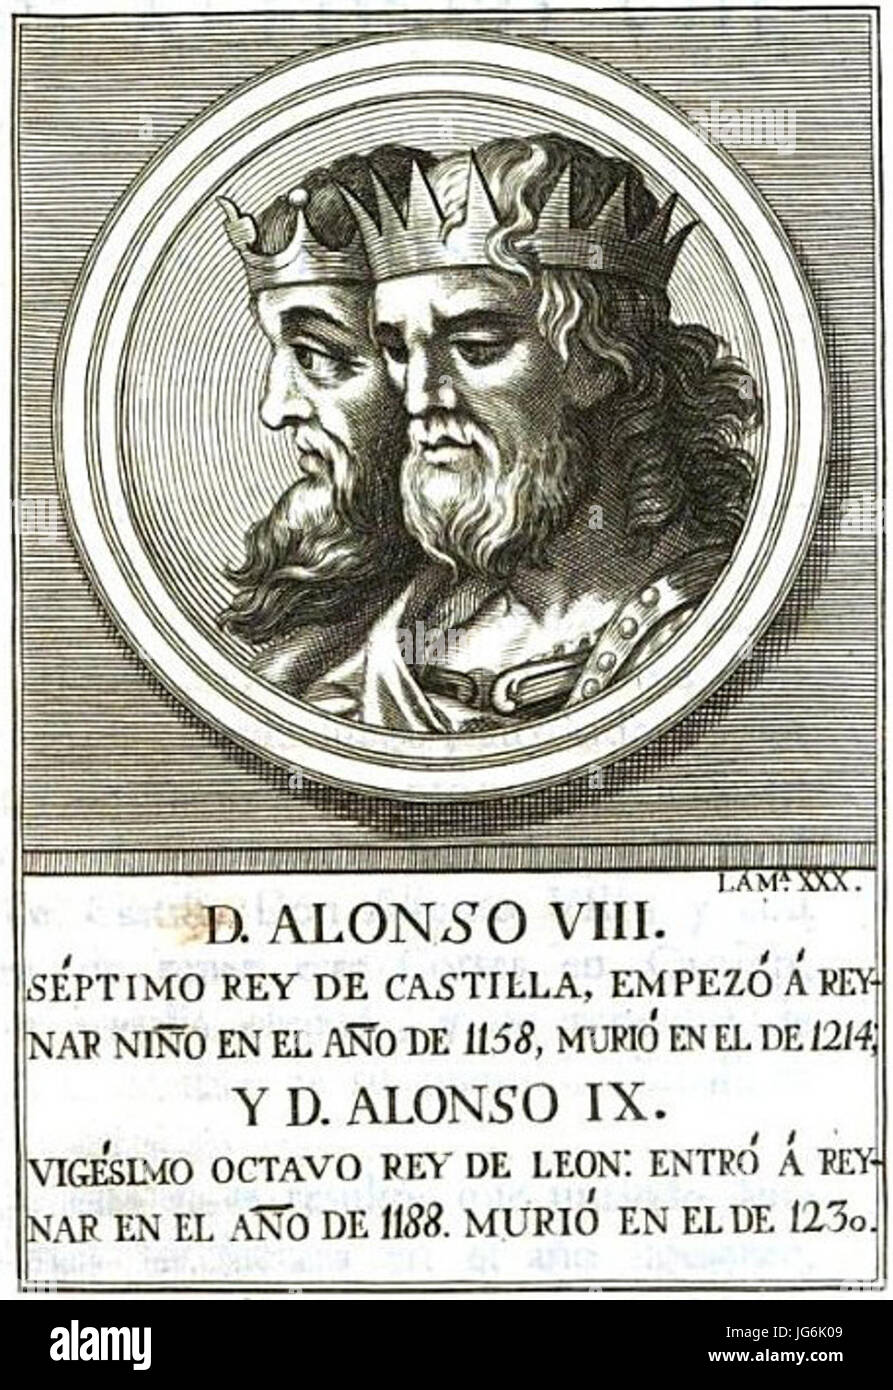 Retrato-265-Reyes de León-Castilla-Alfonso IX y Alfonso VIII Banque D'Images